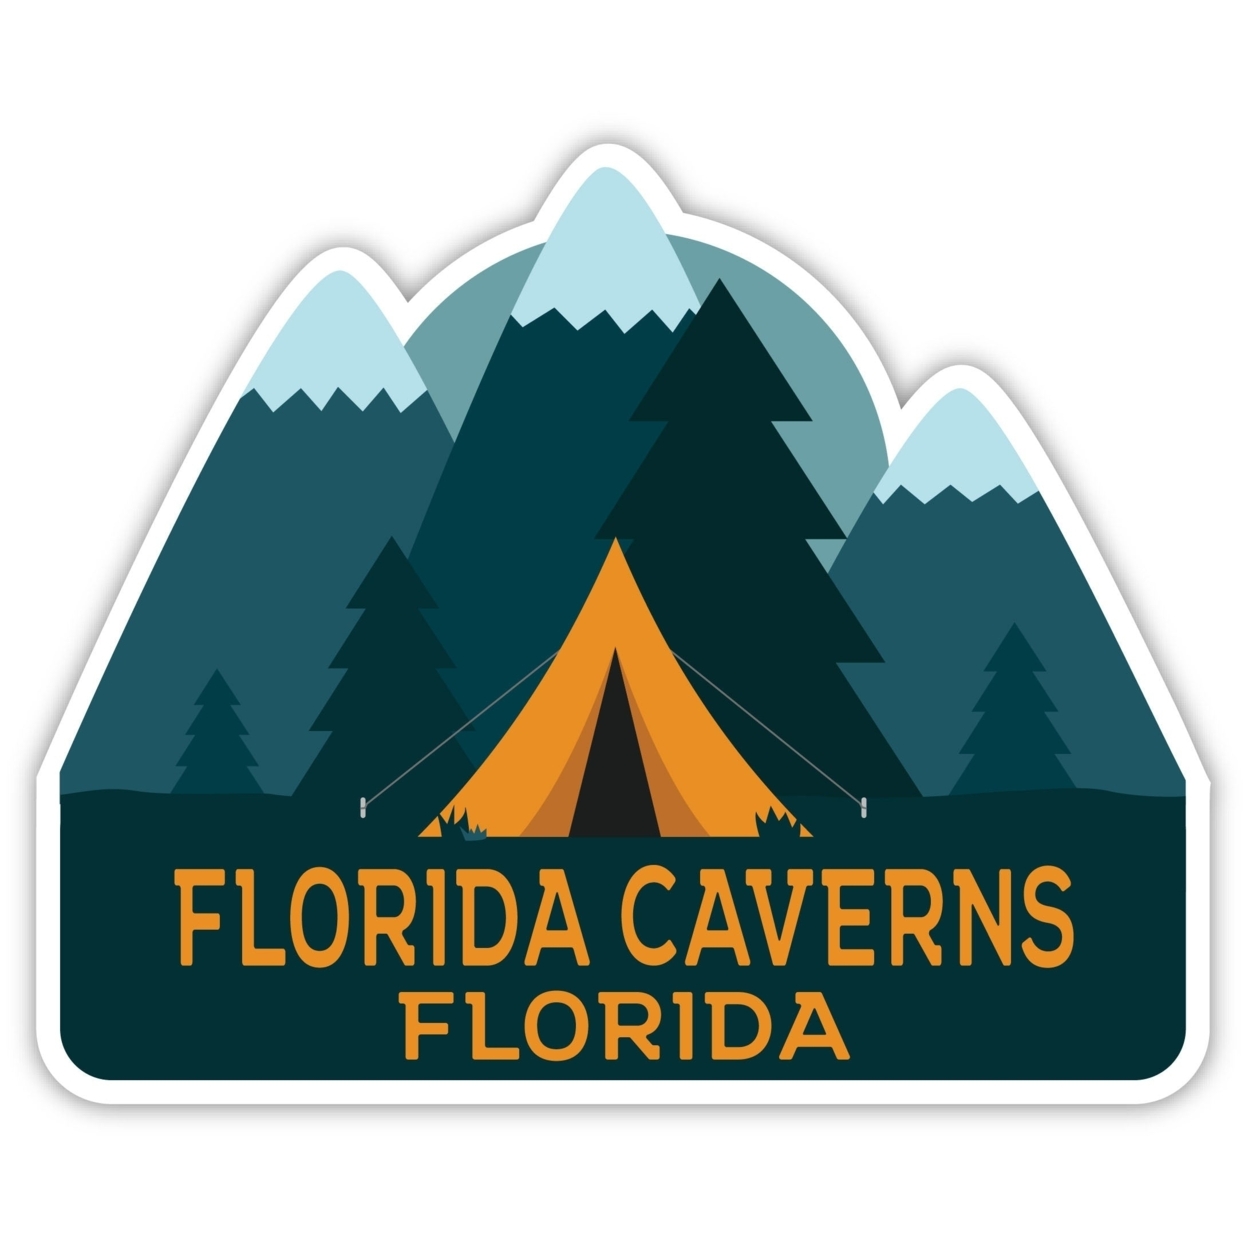 Florida Caverns Florida Souvenir Decorative Stickers (Choose Theme And Size) - 4-Pack, 10-Inch, Tent